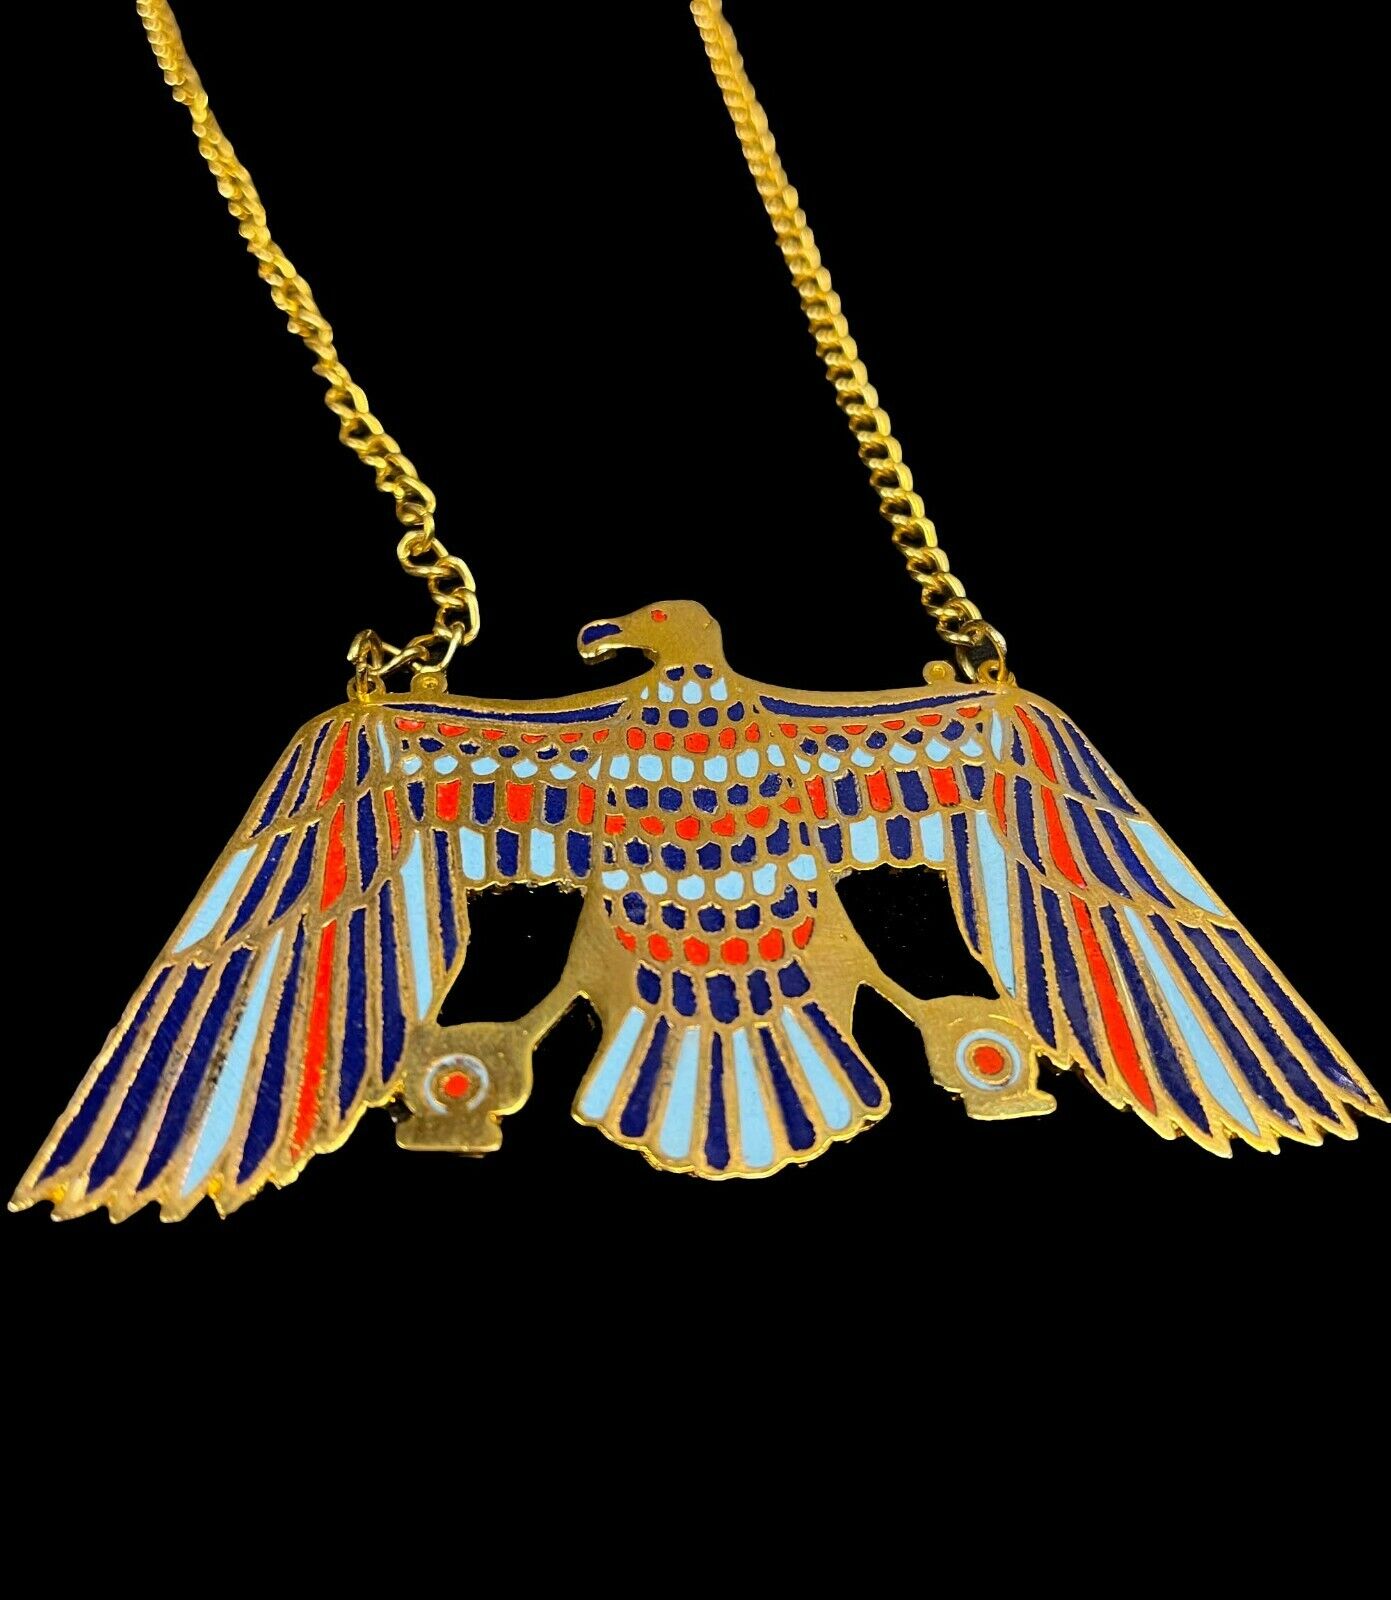 Gorgeous Egyptian Pendant of The Goddess Nekhbet The protector (patron)